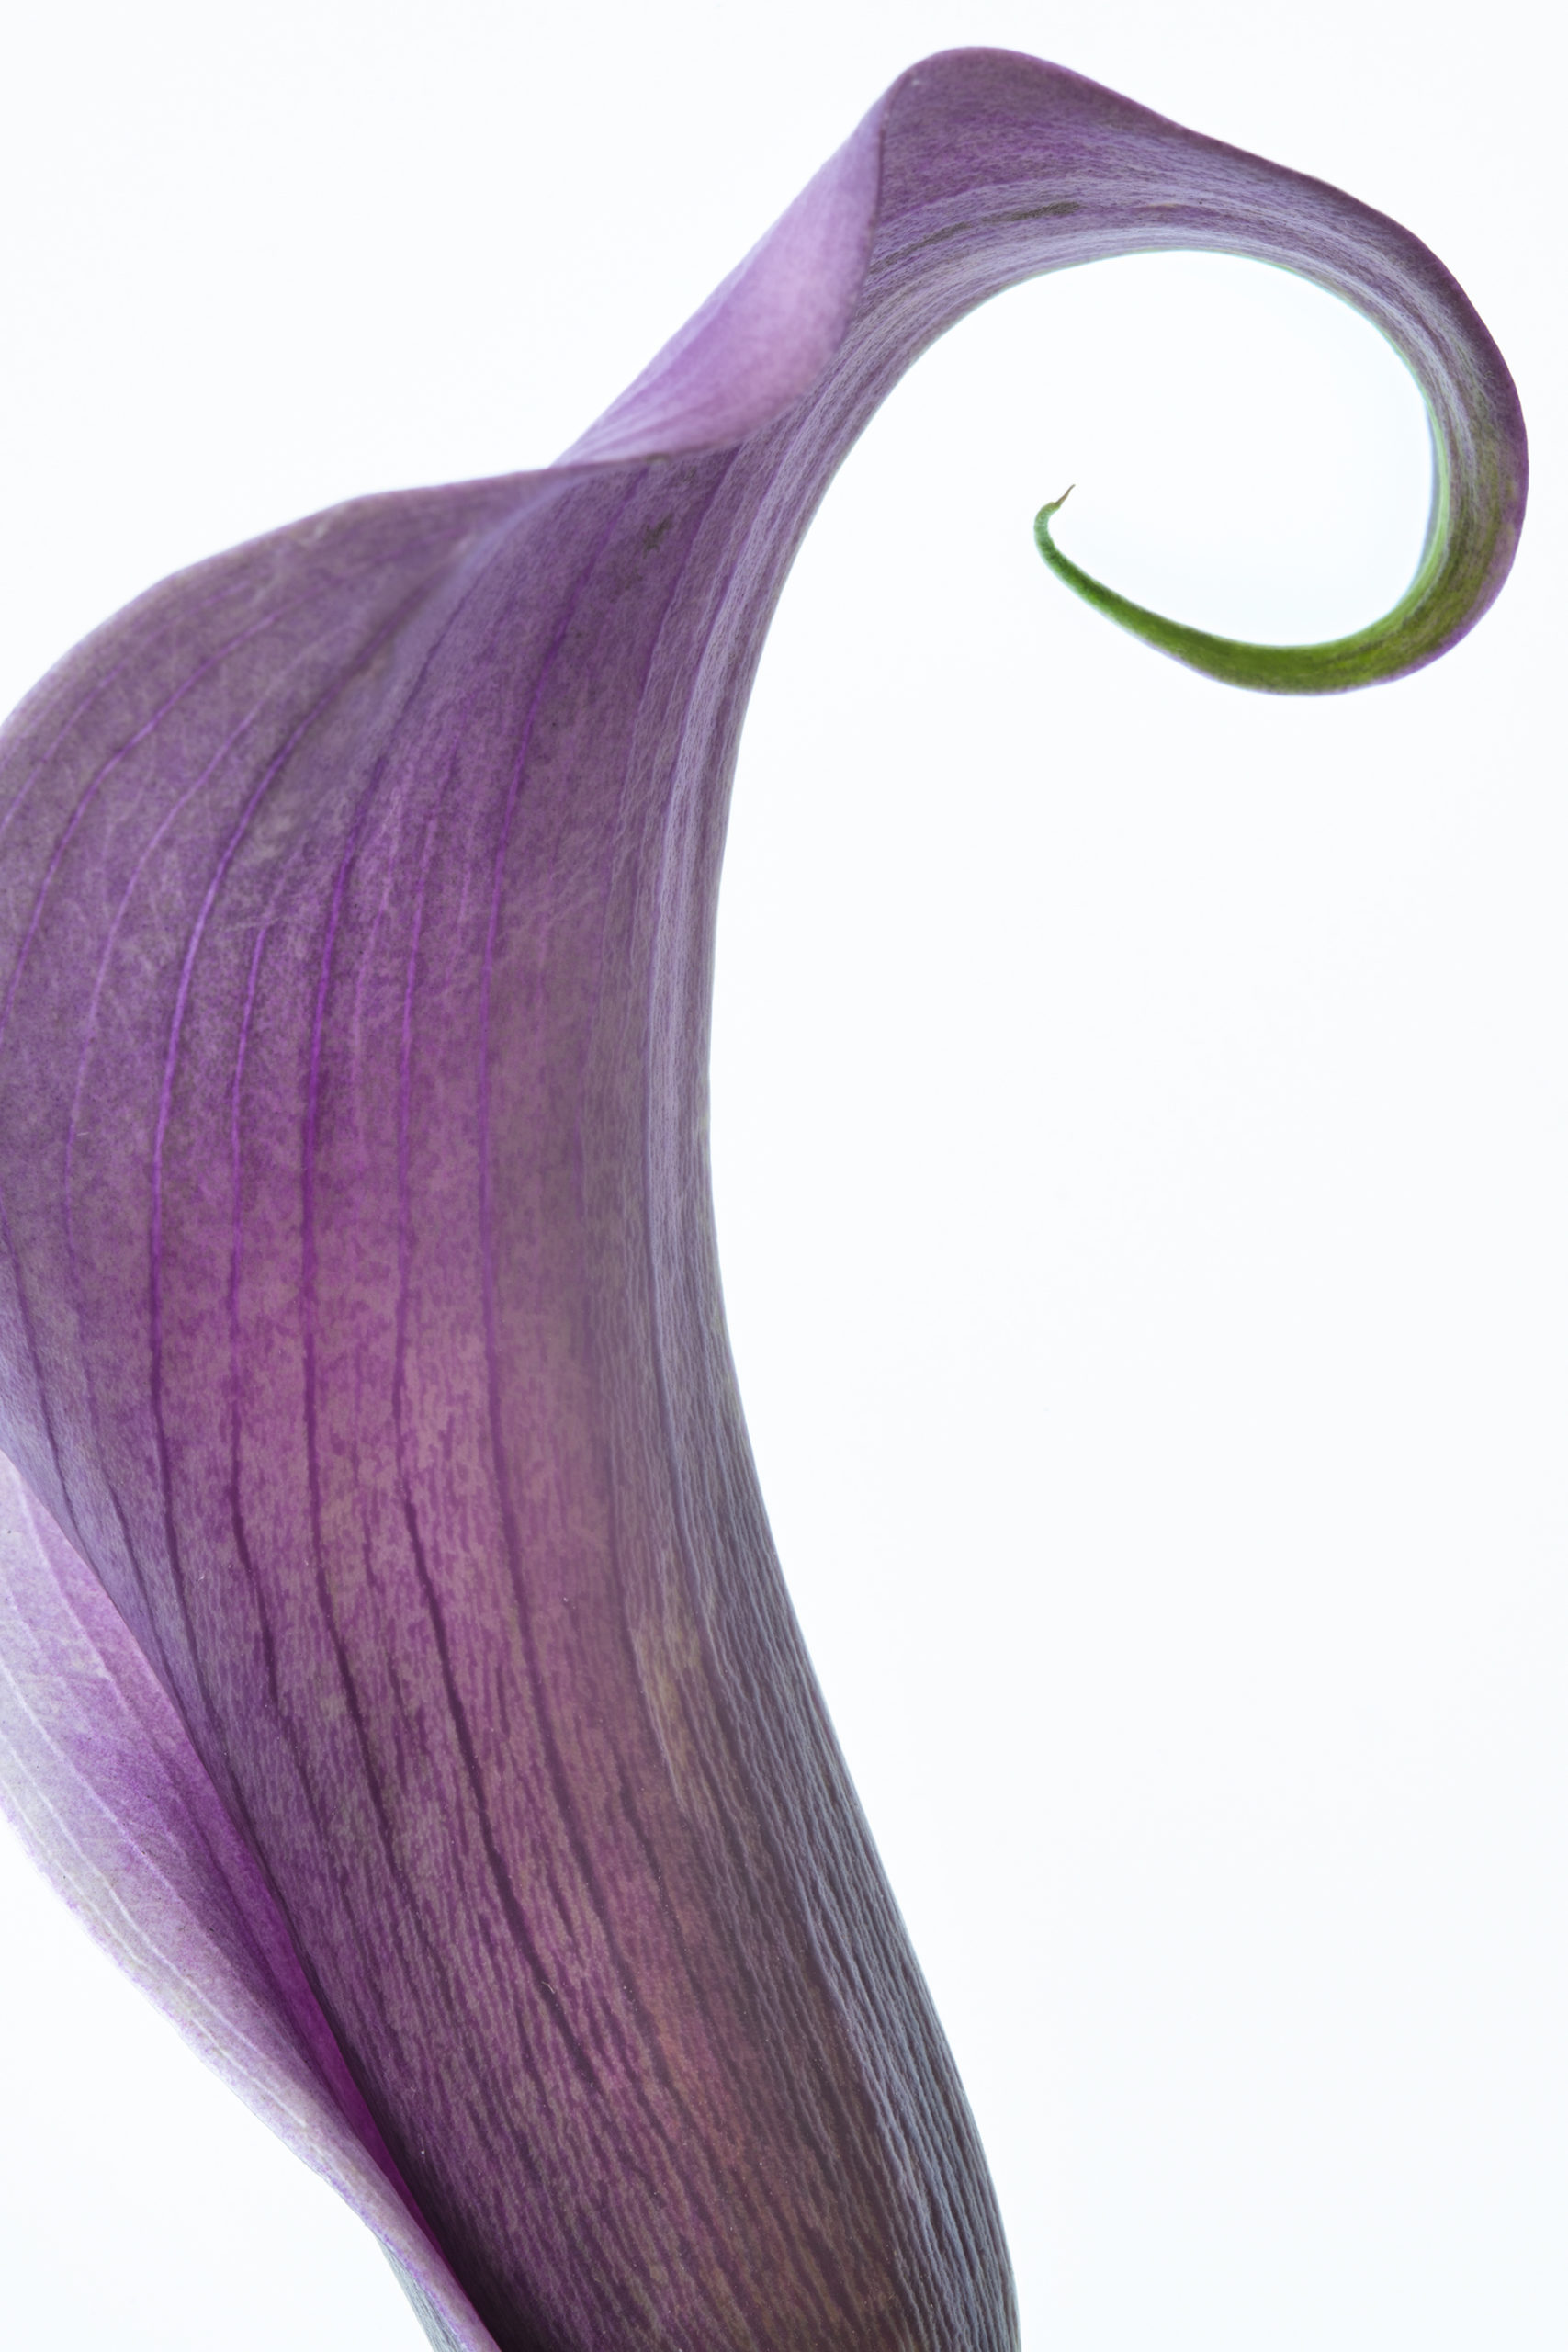 Purple Cala Lily © Harold Davis